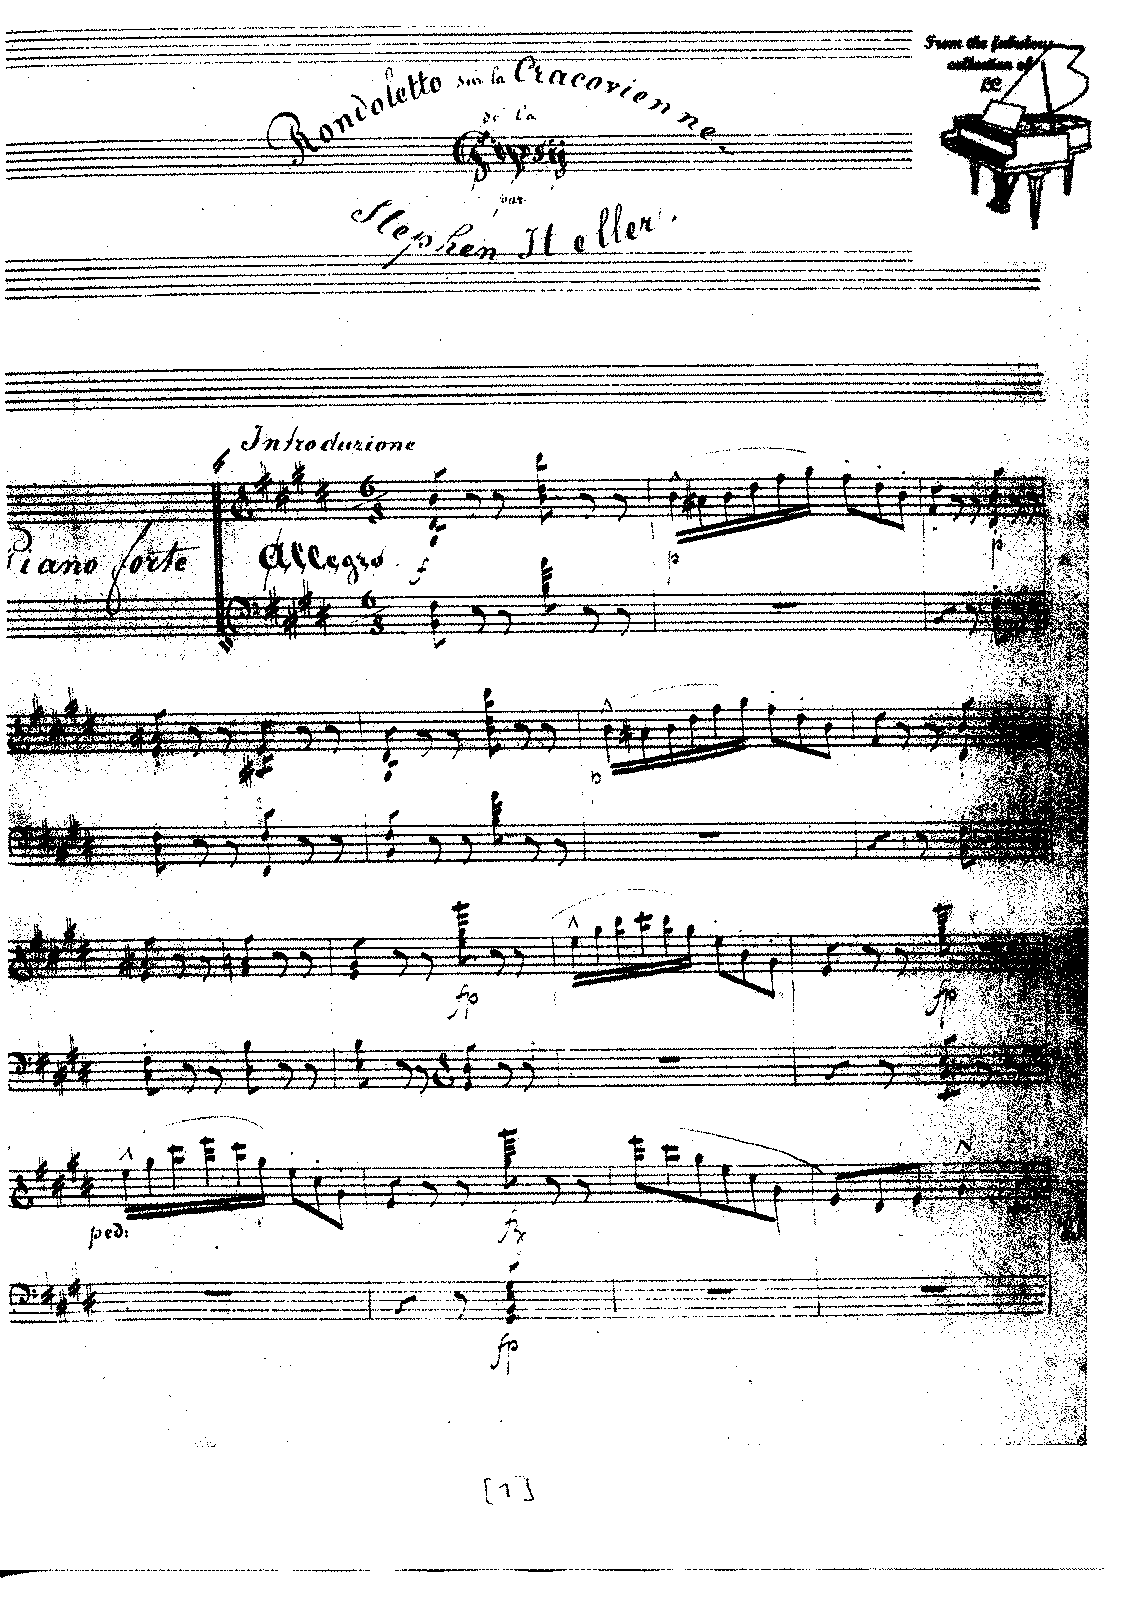 Rondoletto sur la Cracovienne, Op.12 (Heller, Stephen) - IMSLP